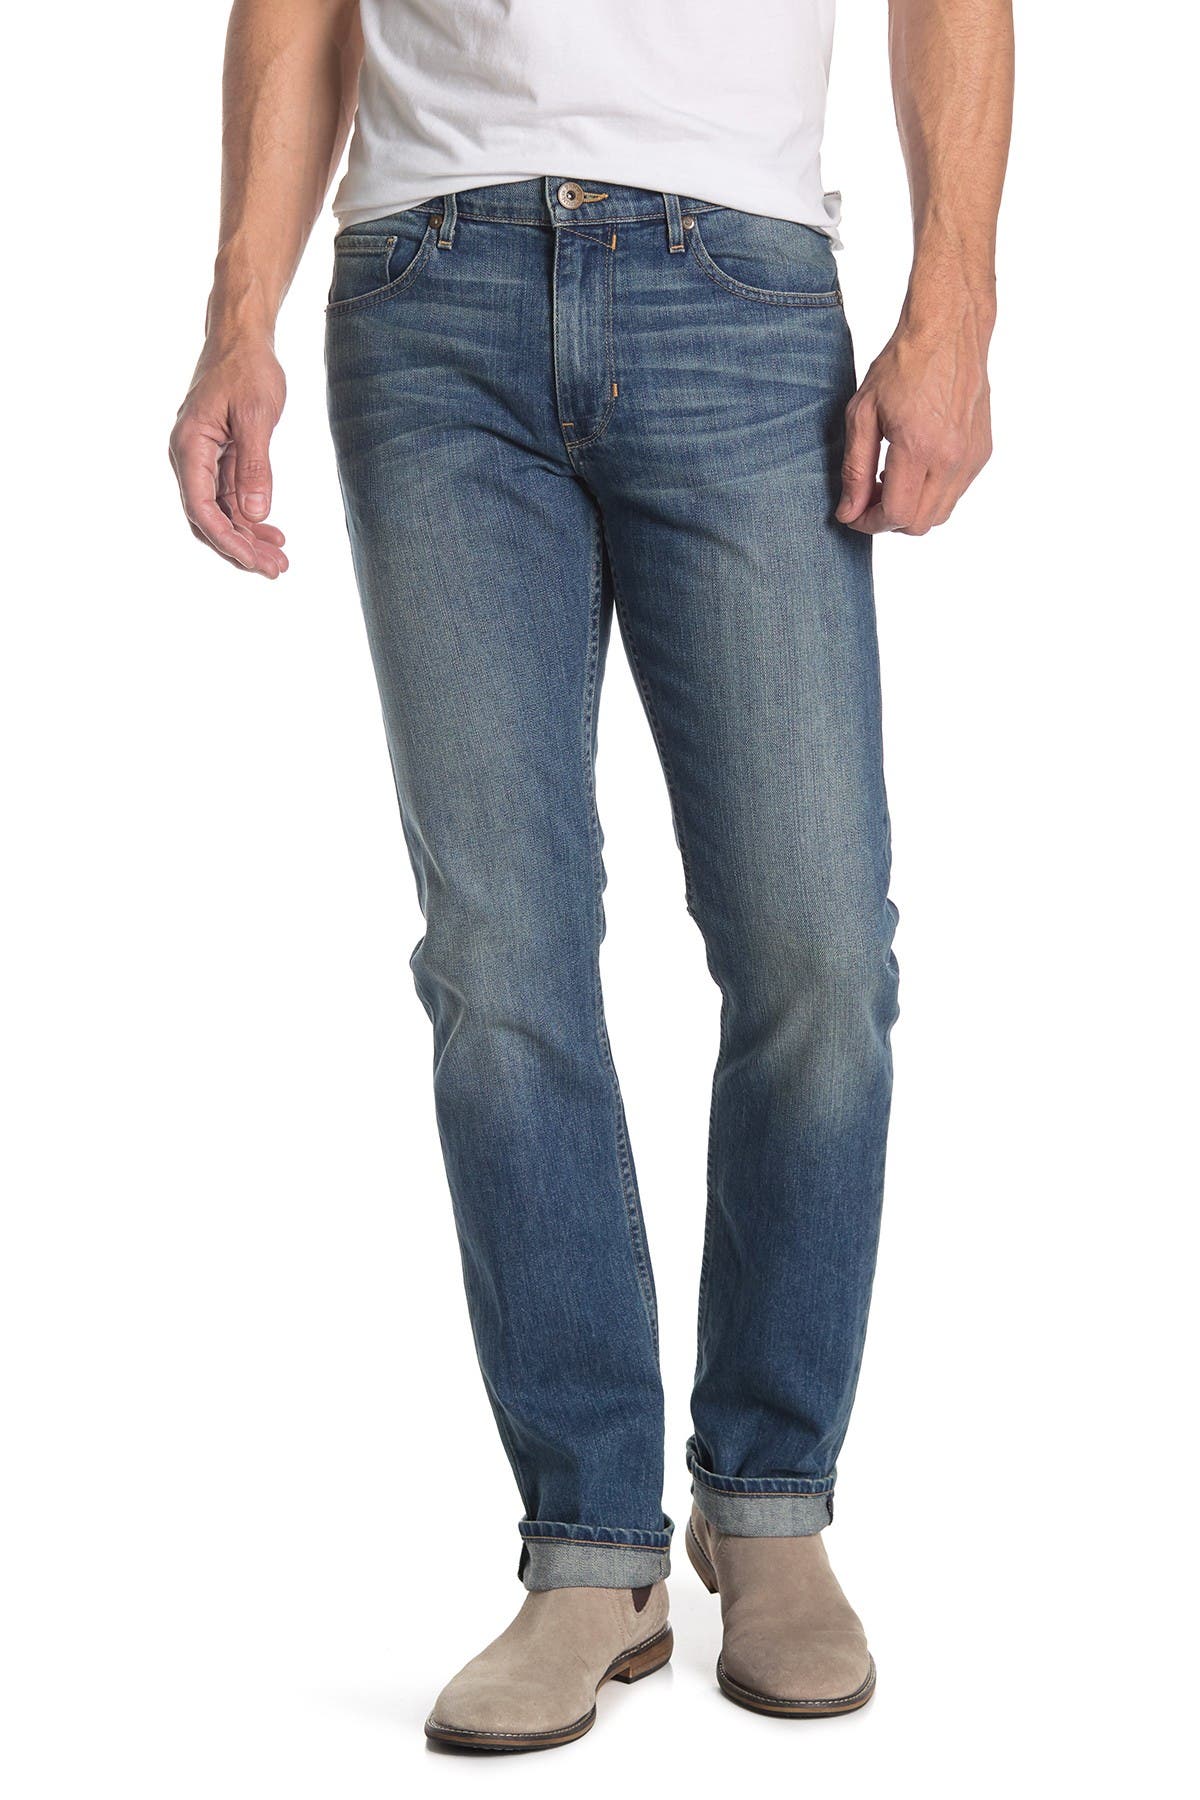 nordstrom mens paige jeans